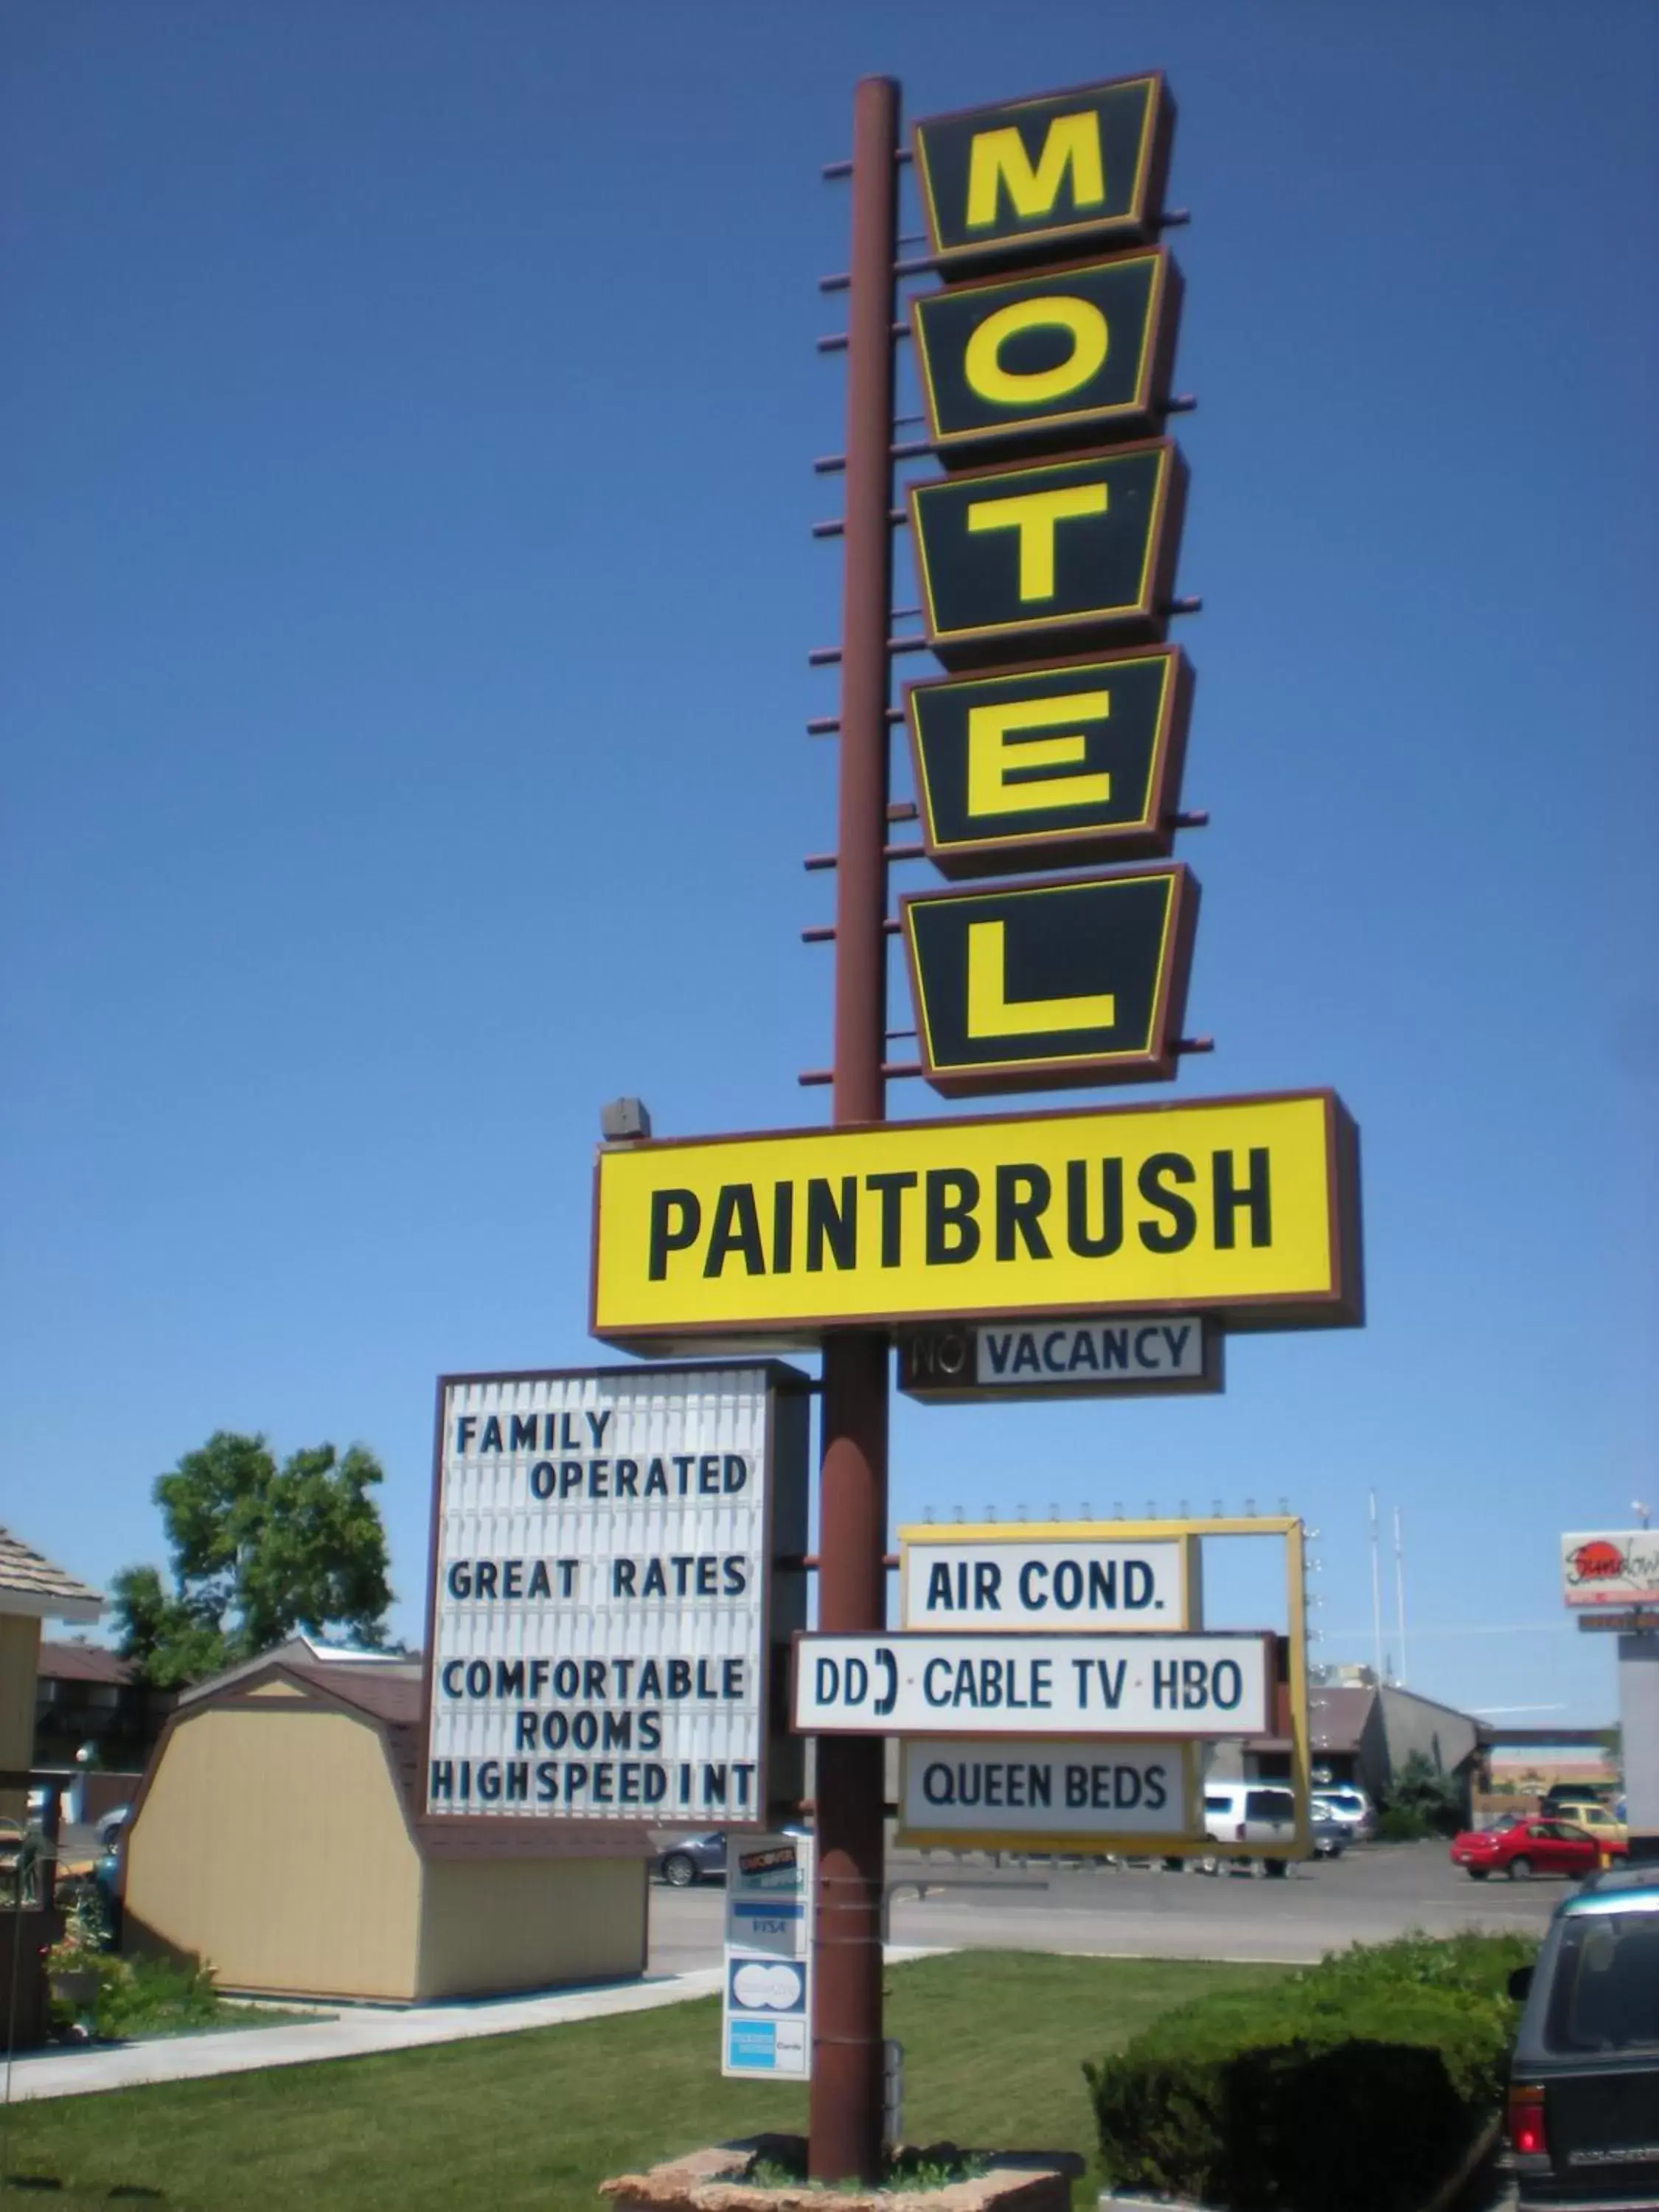 Property logo or sign in Paintbrush Motel